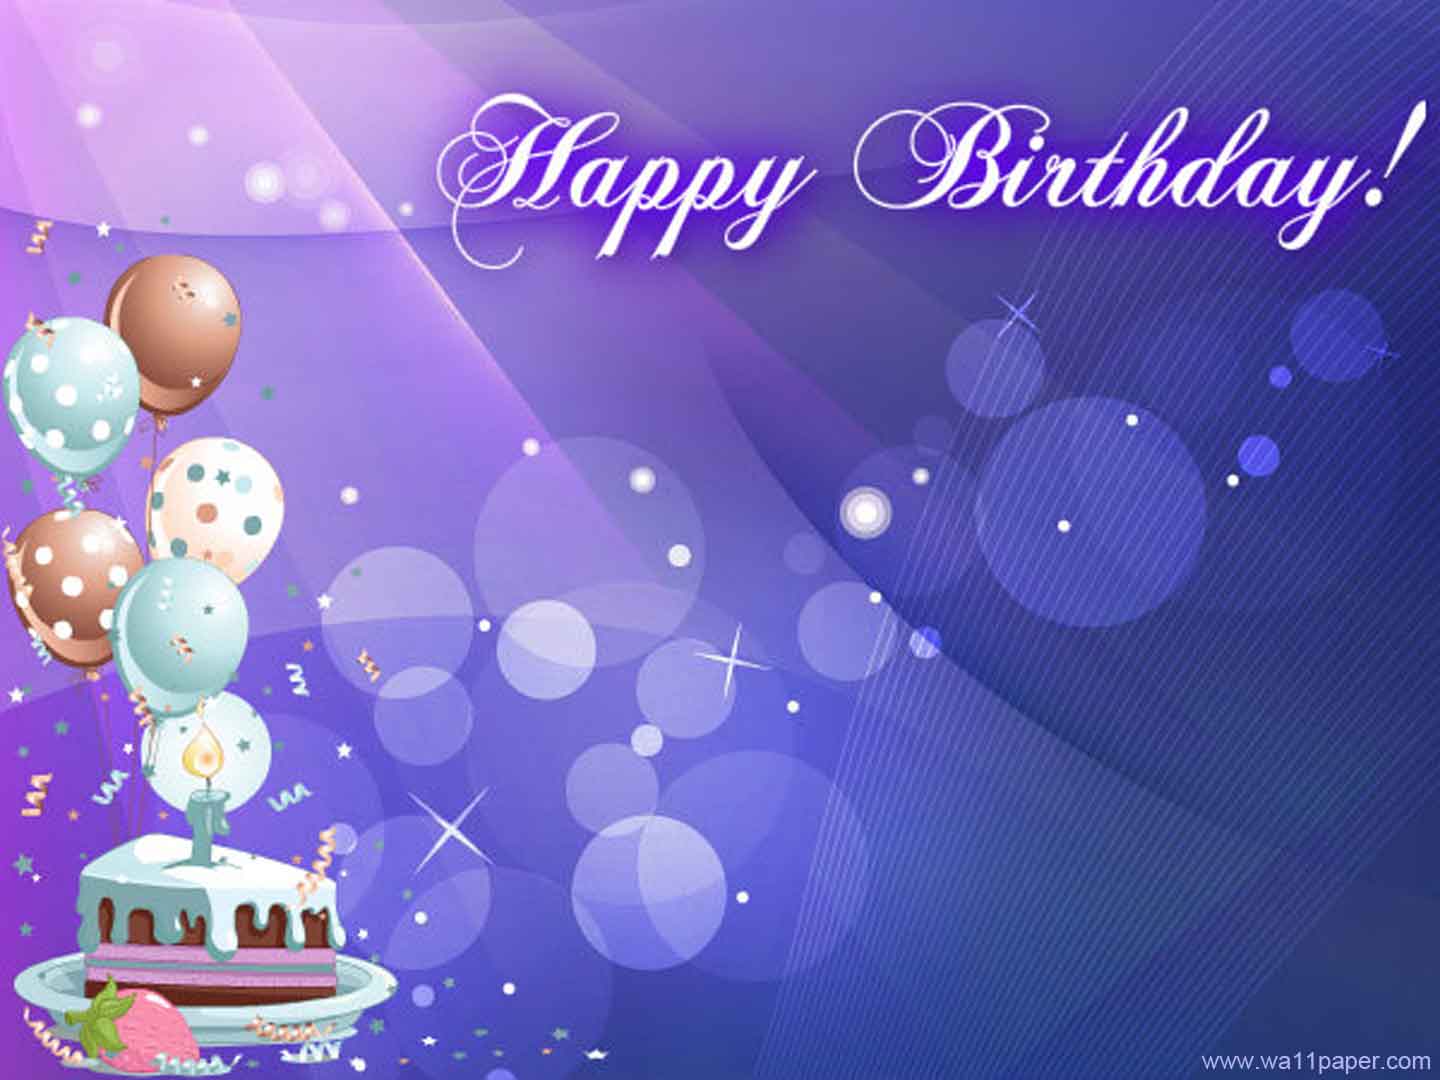 Happy Birthday Background Images 1440x1080